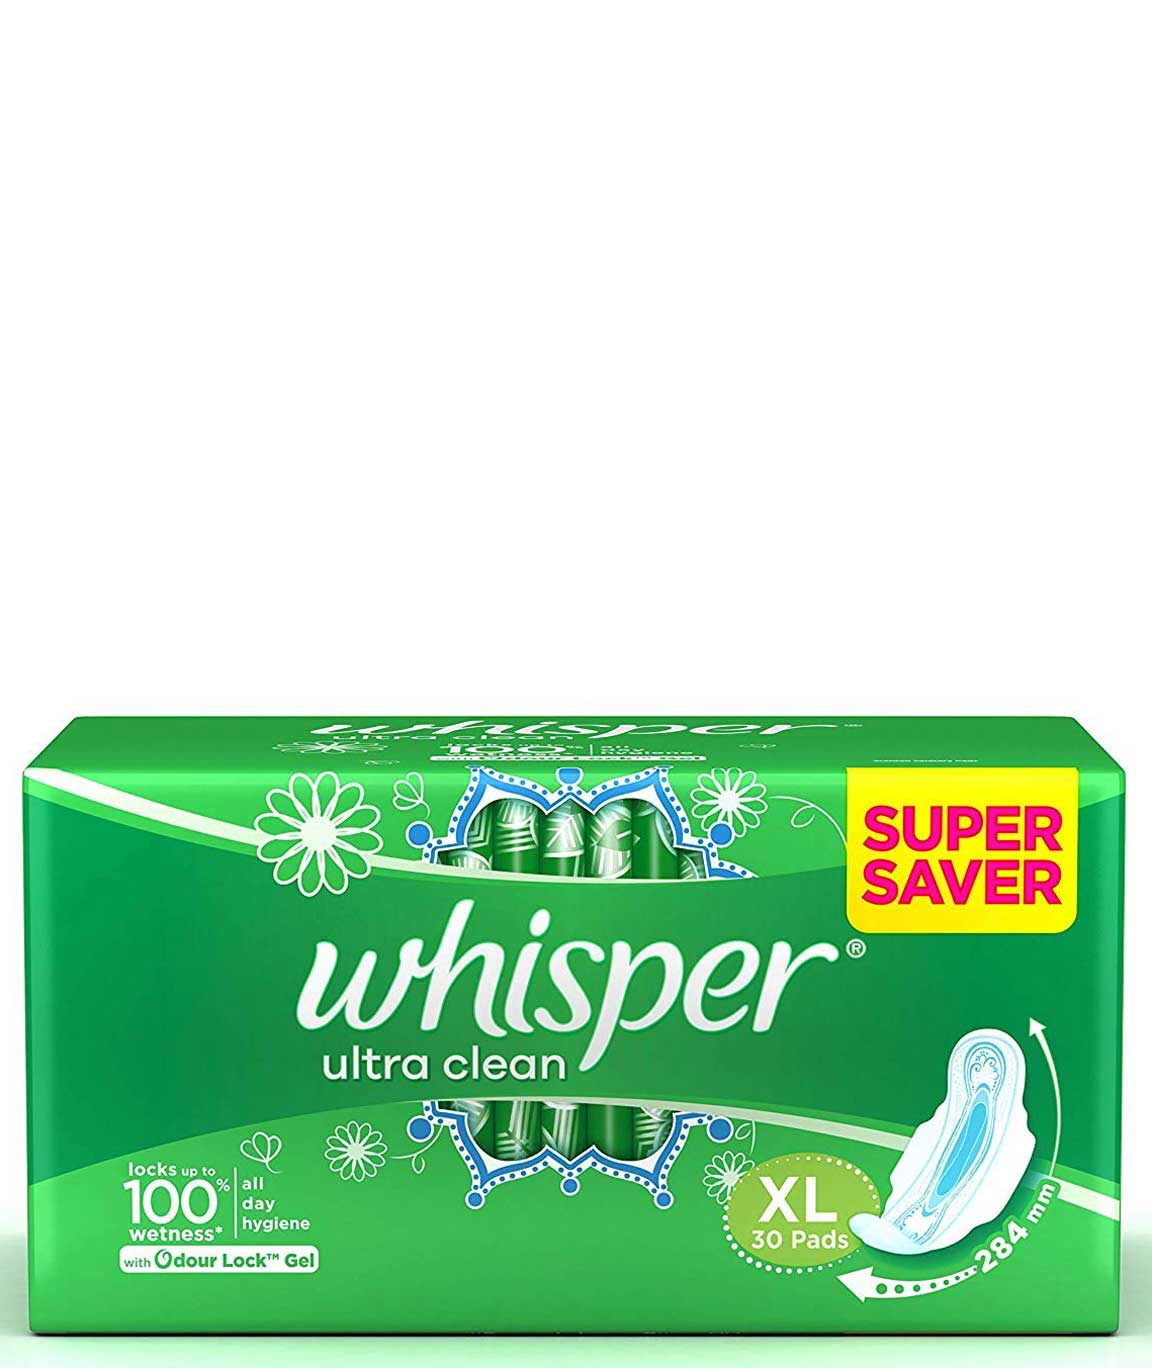 Whisper Ultra Clean-Sanitary Pads, XL Plus 30 Pads